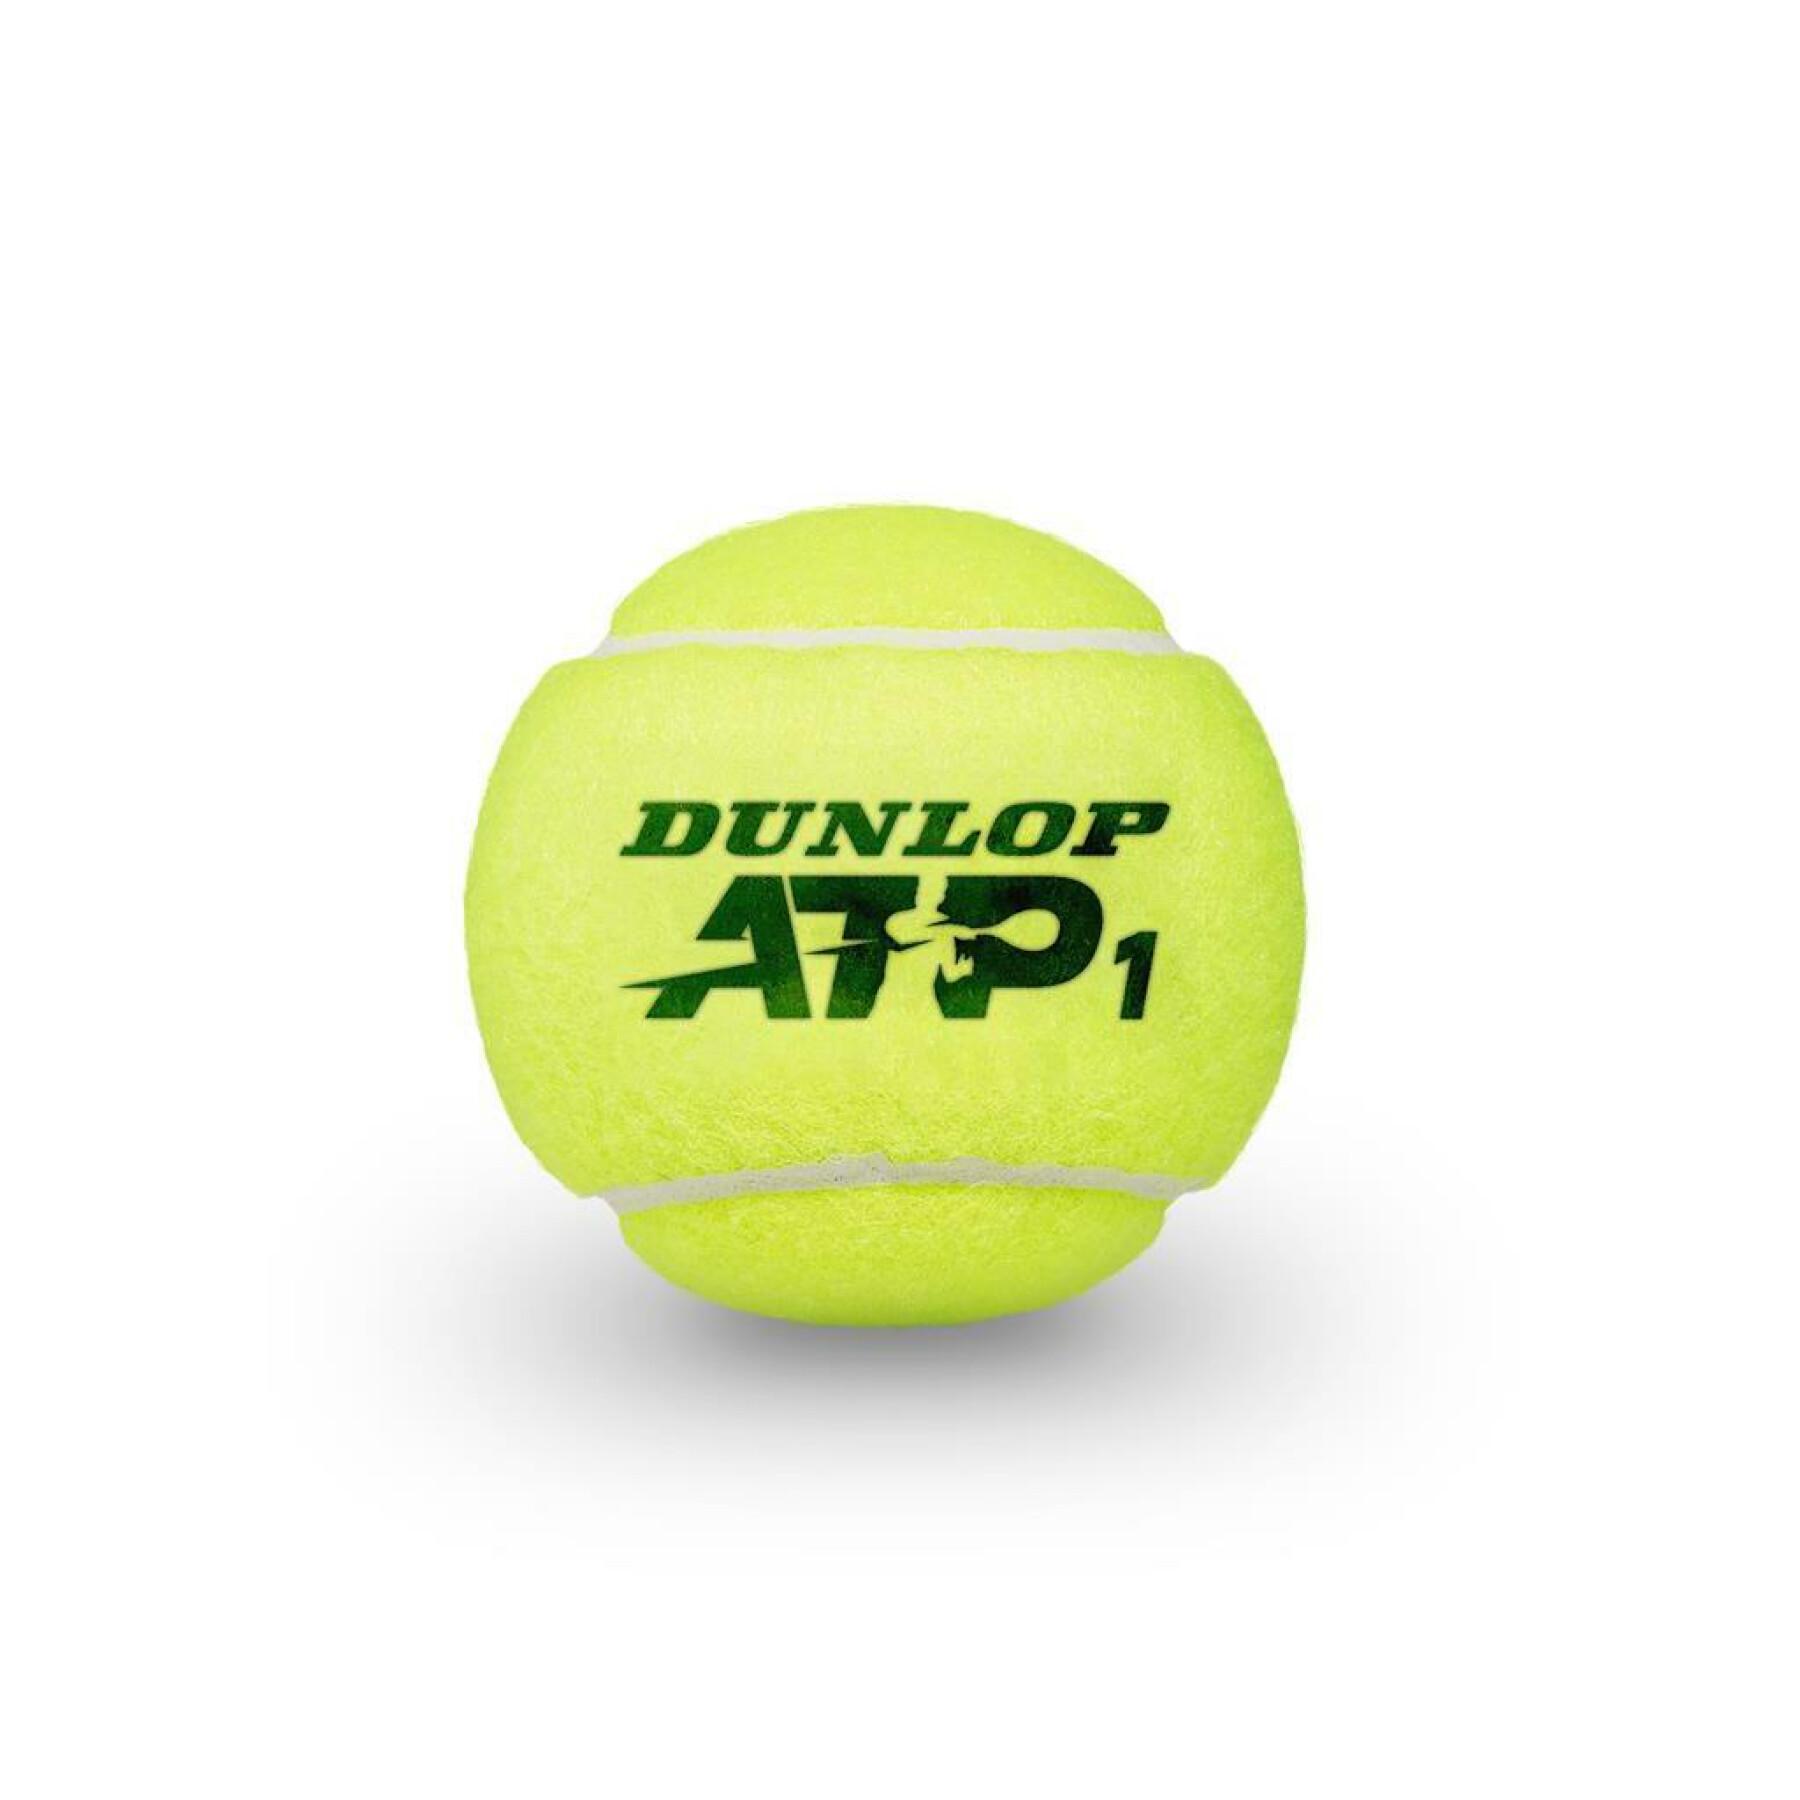 Set van 3 tennisballen Dunlop atp